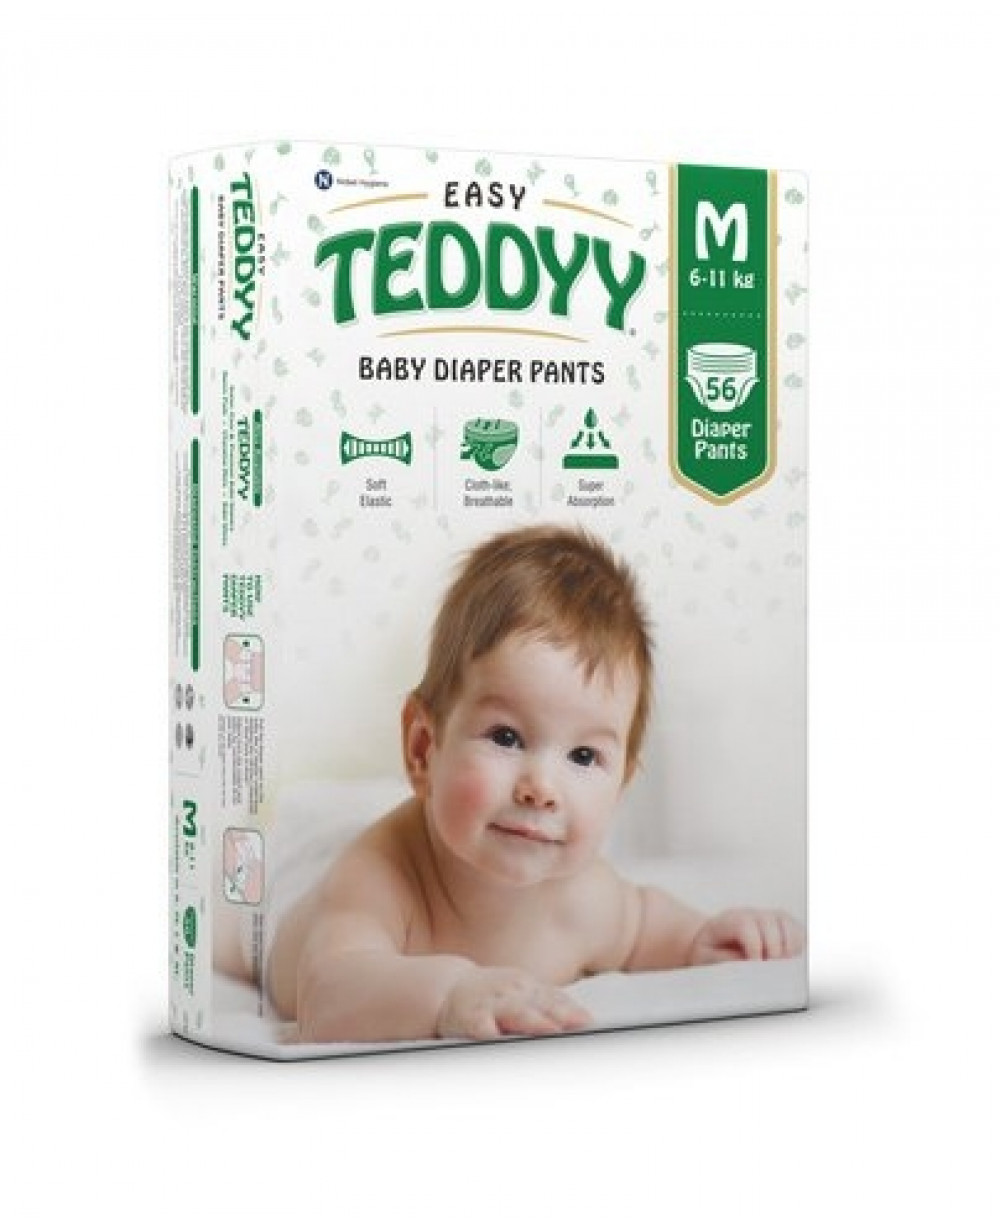 teddyy baby diapers price